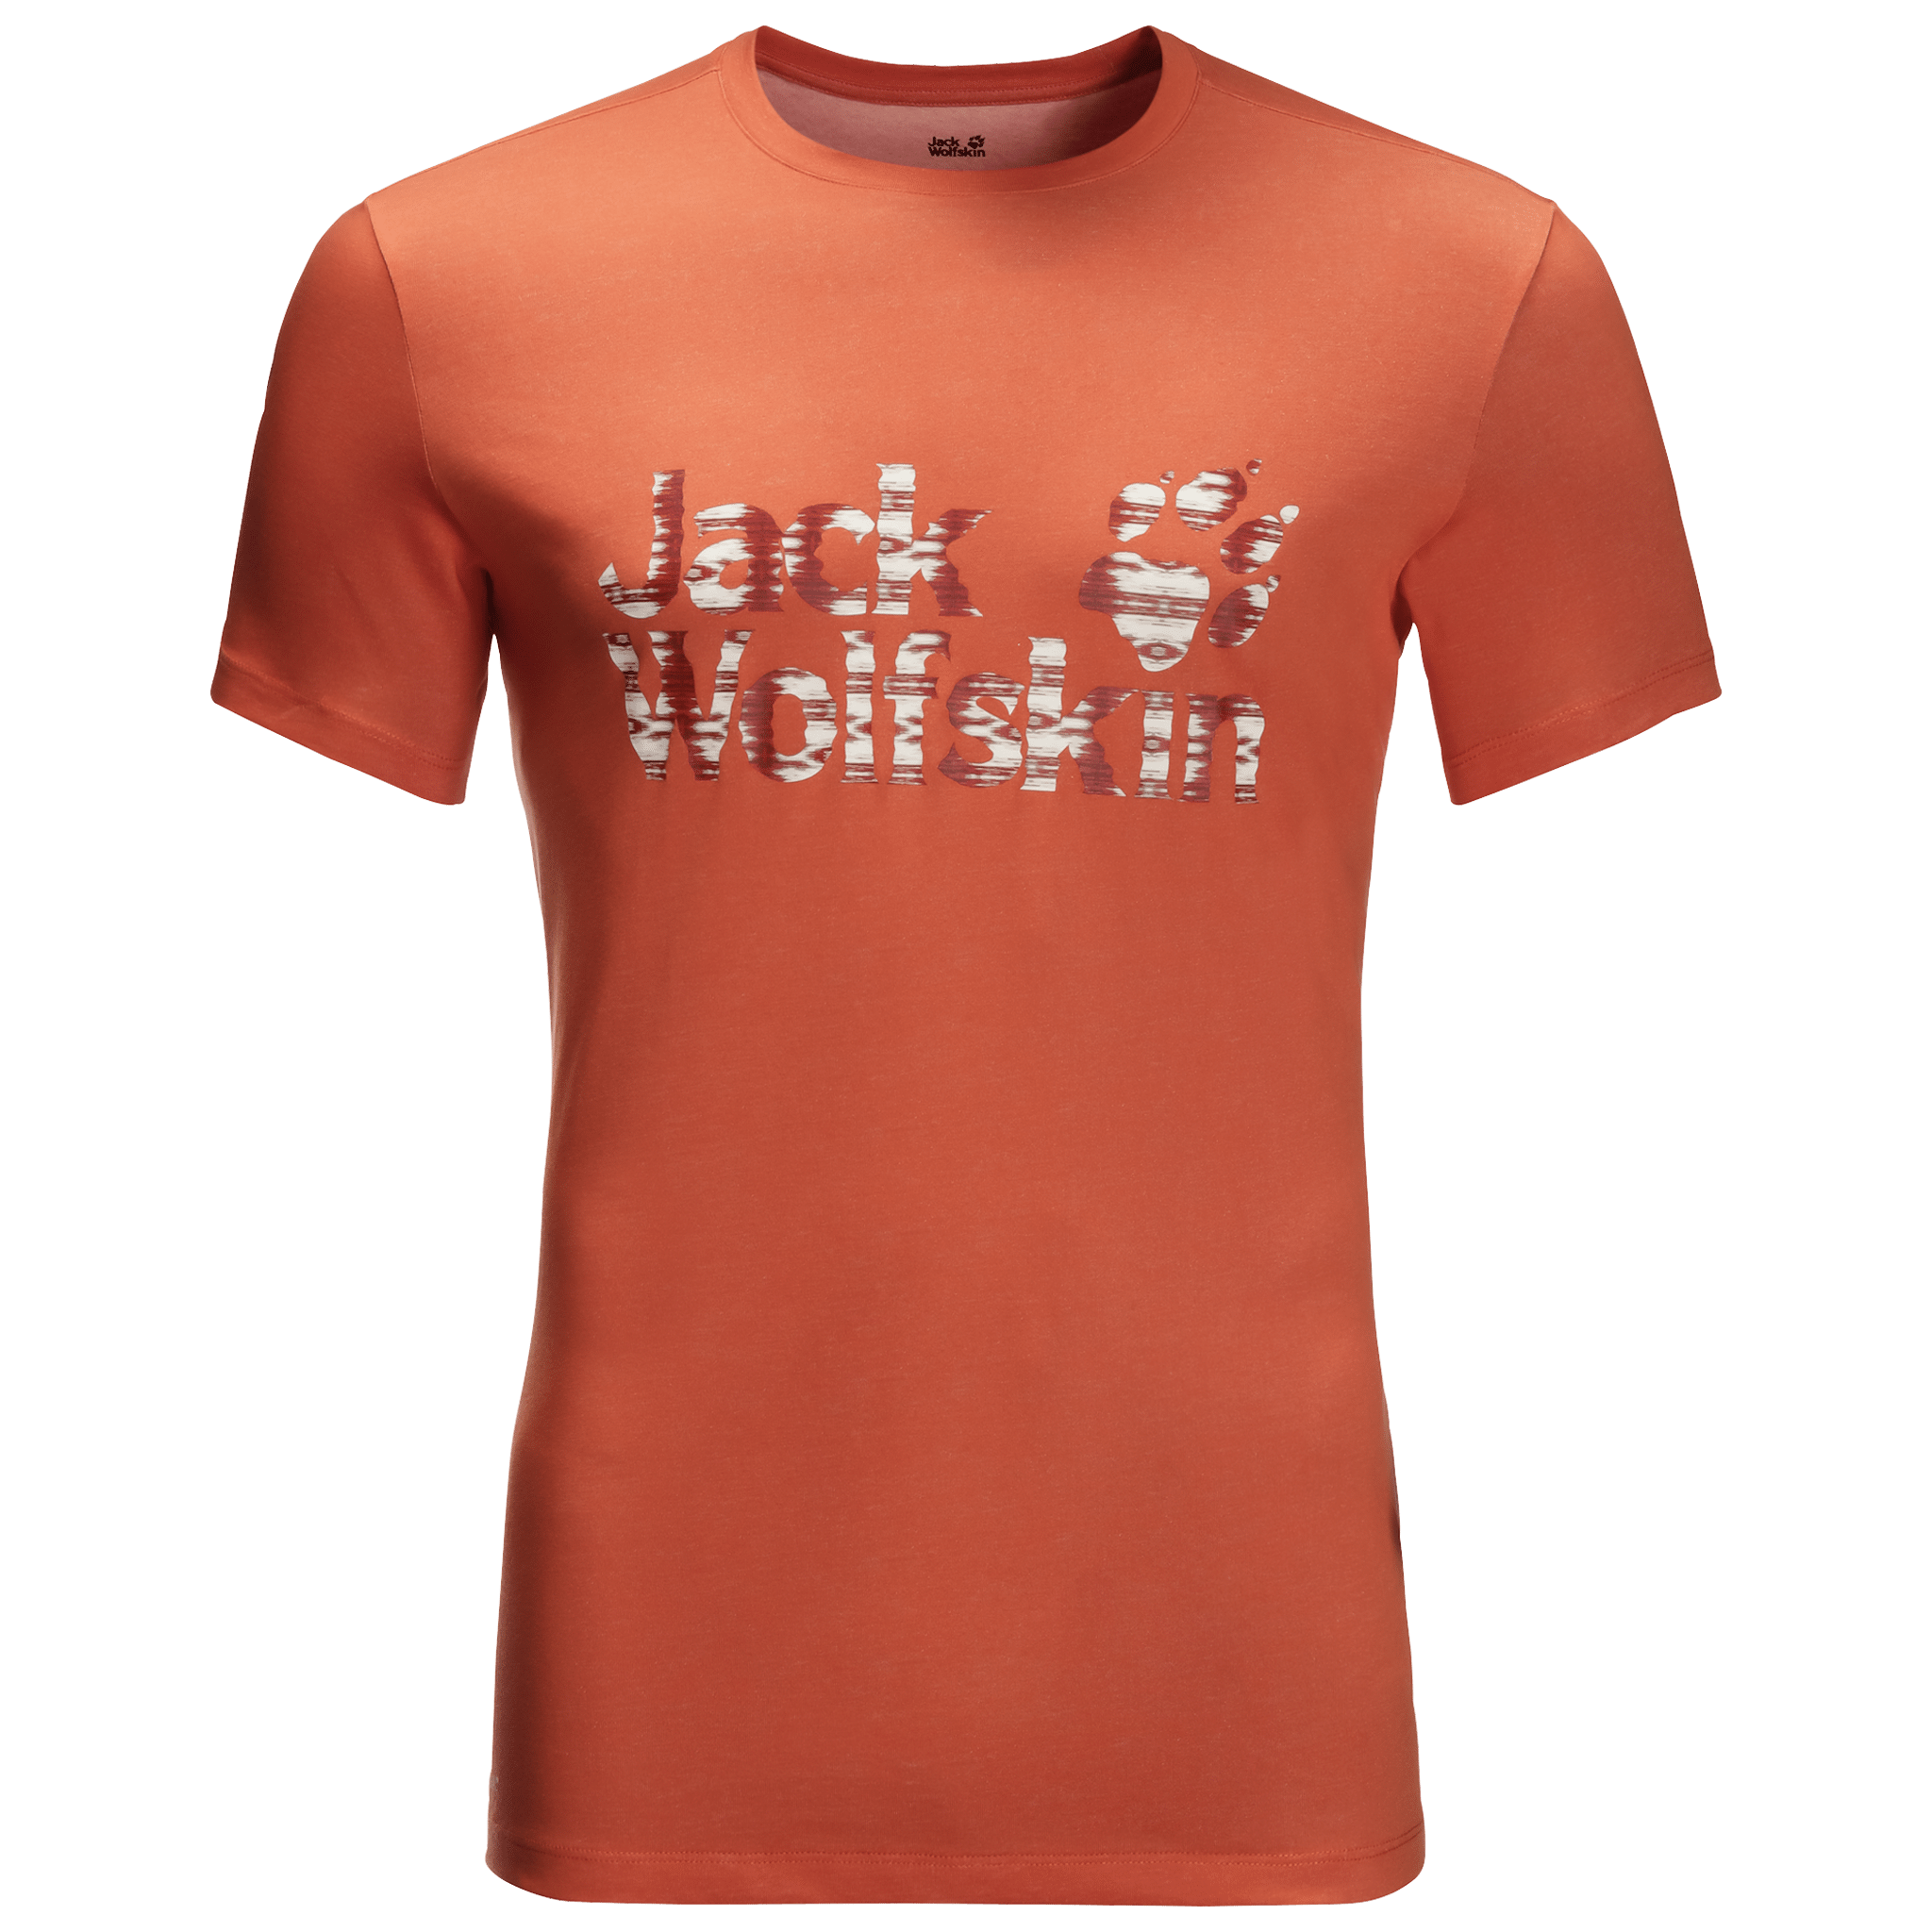 Saffron Orange Lightweight Casual T-Shirt